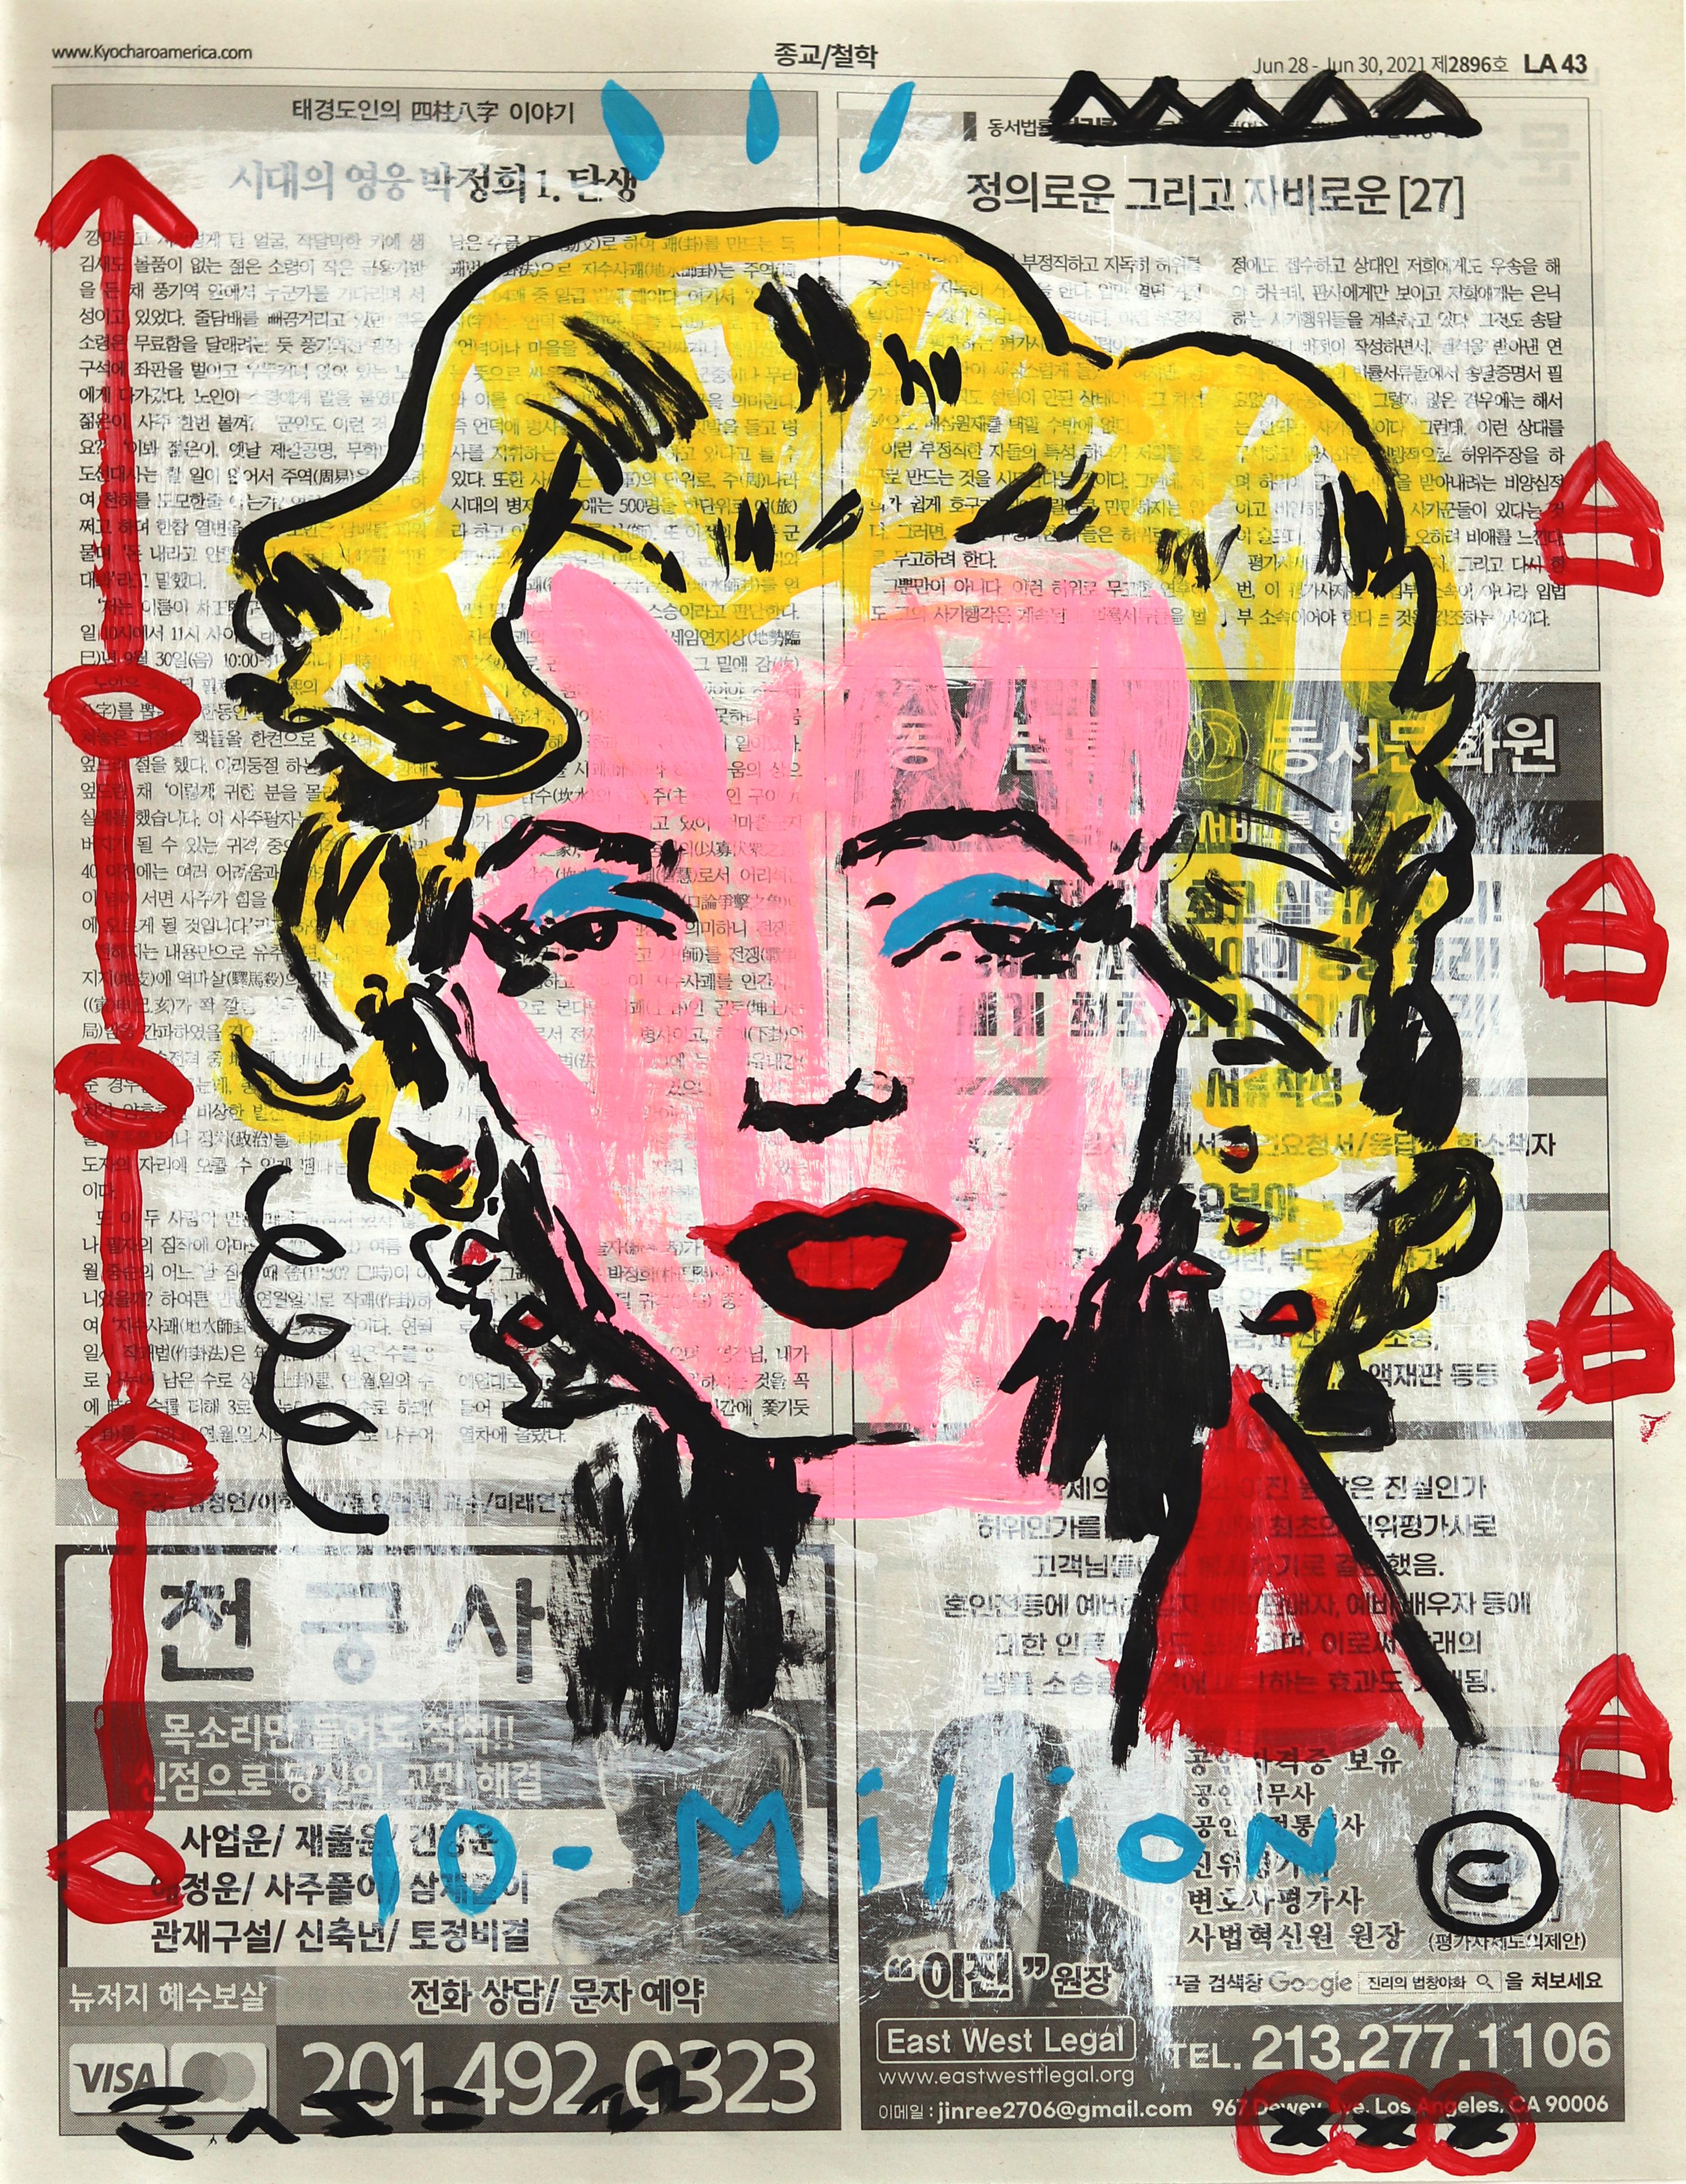 Gary John Figurative Painting - Marilyn Times Ten Million - Original Street Art Pop Art Painting on Newspaper